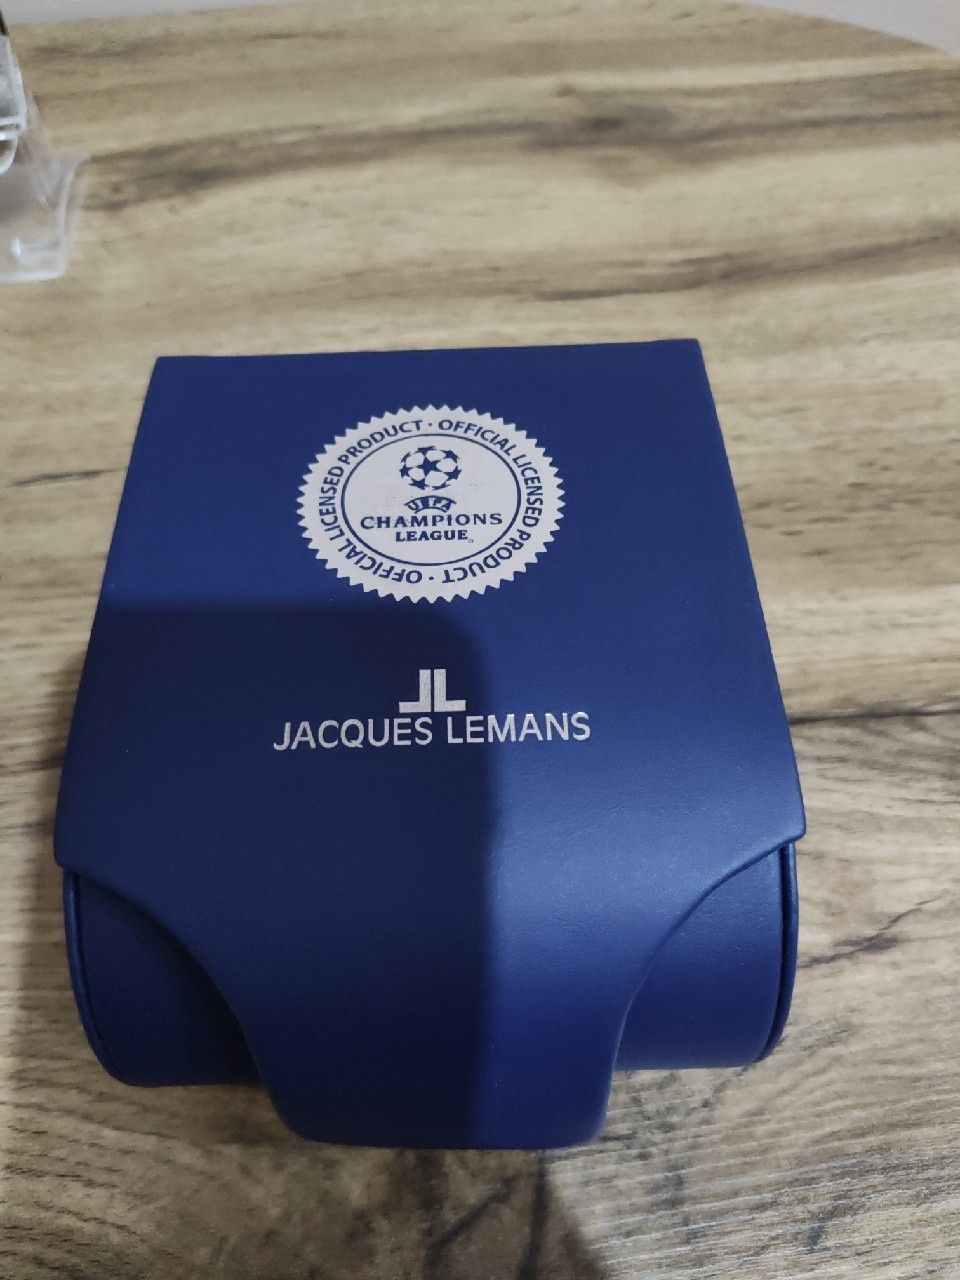 Zegarek Jacques Lemans Liga mistrzów